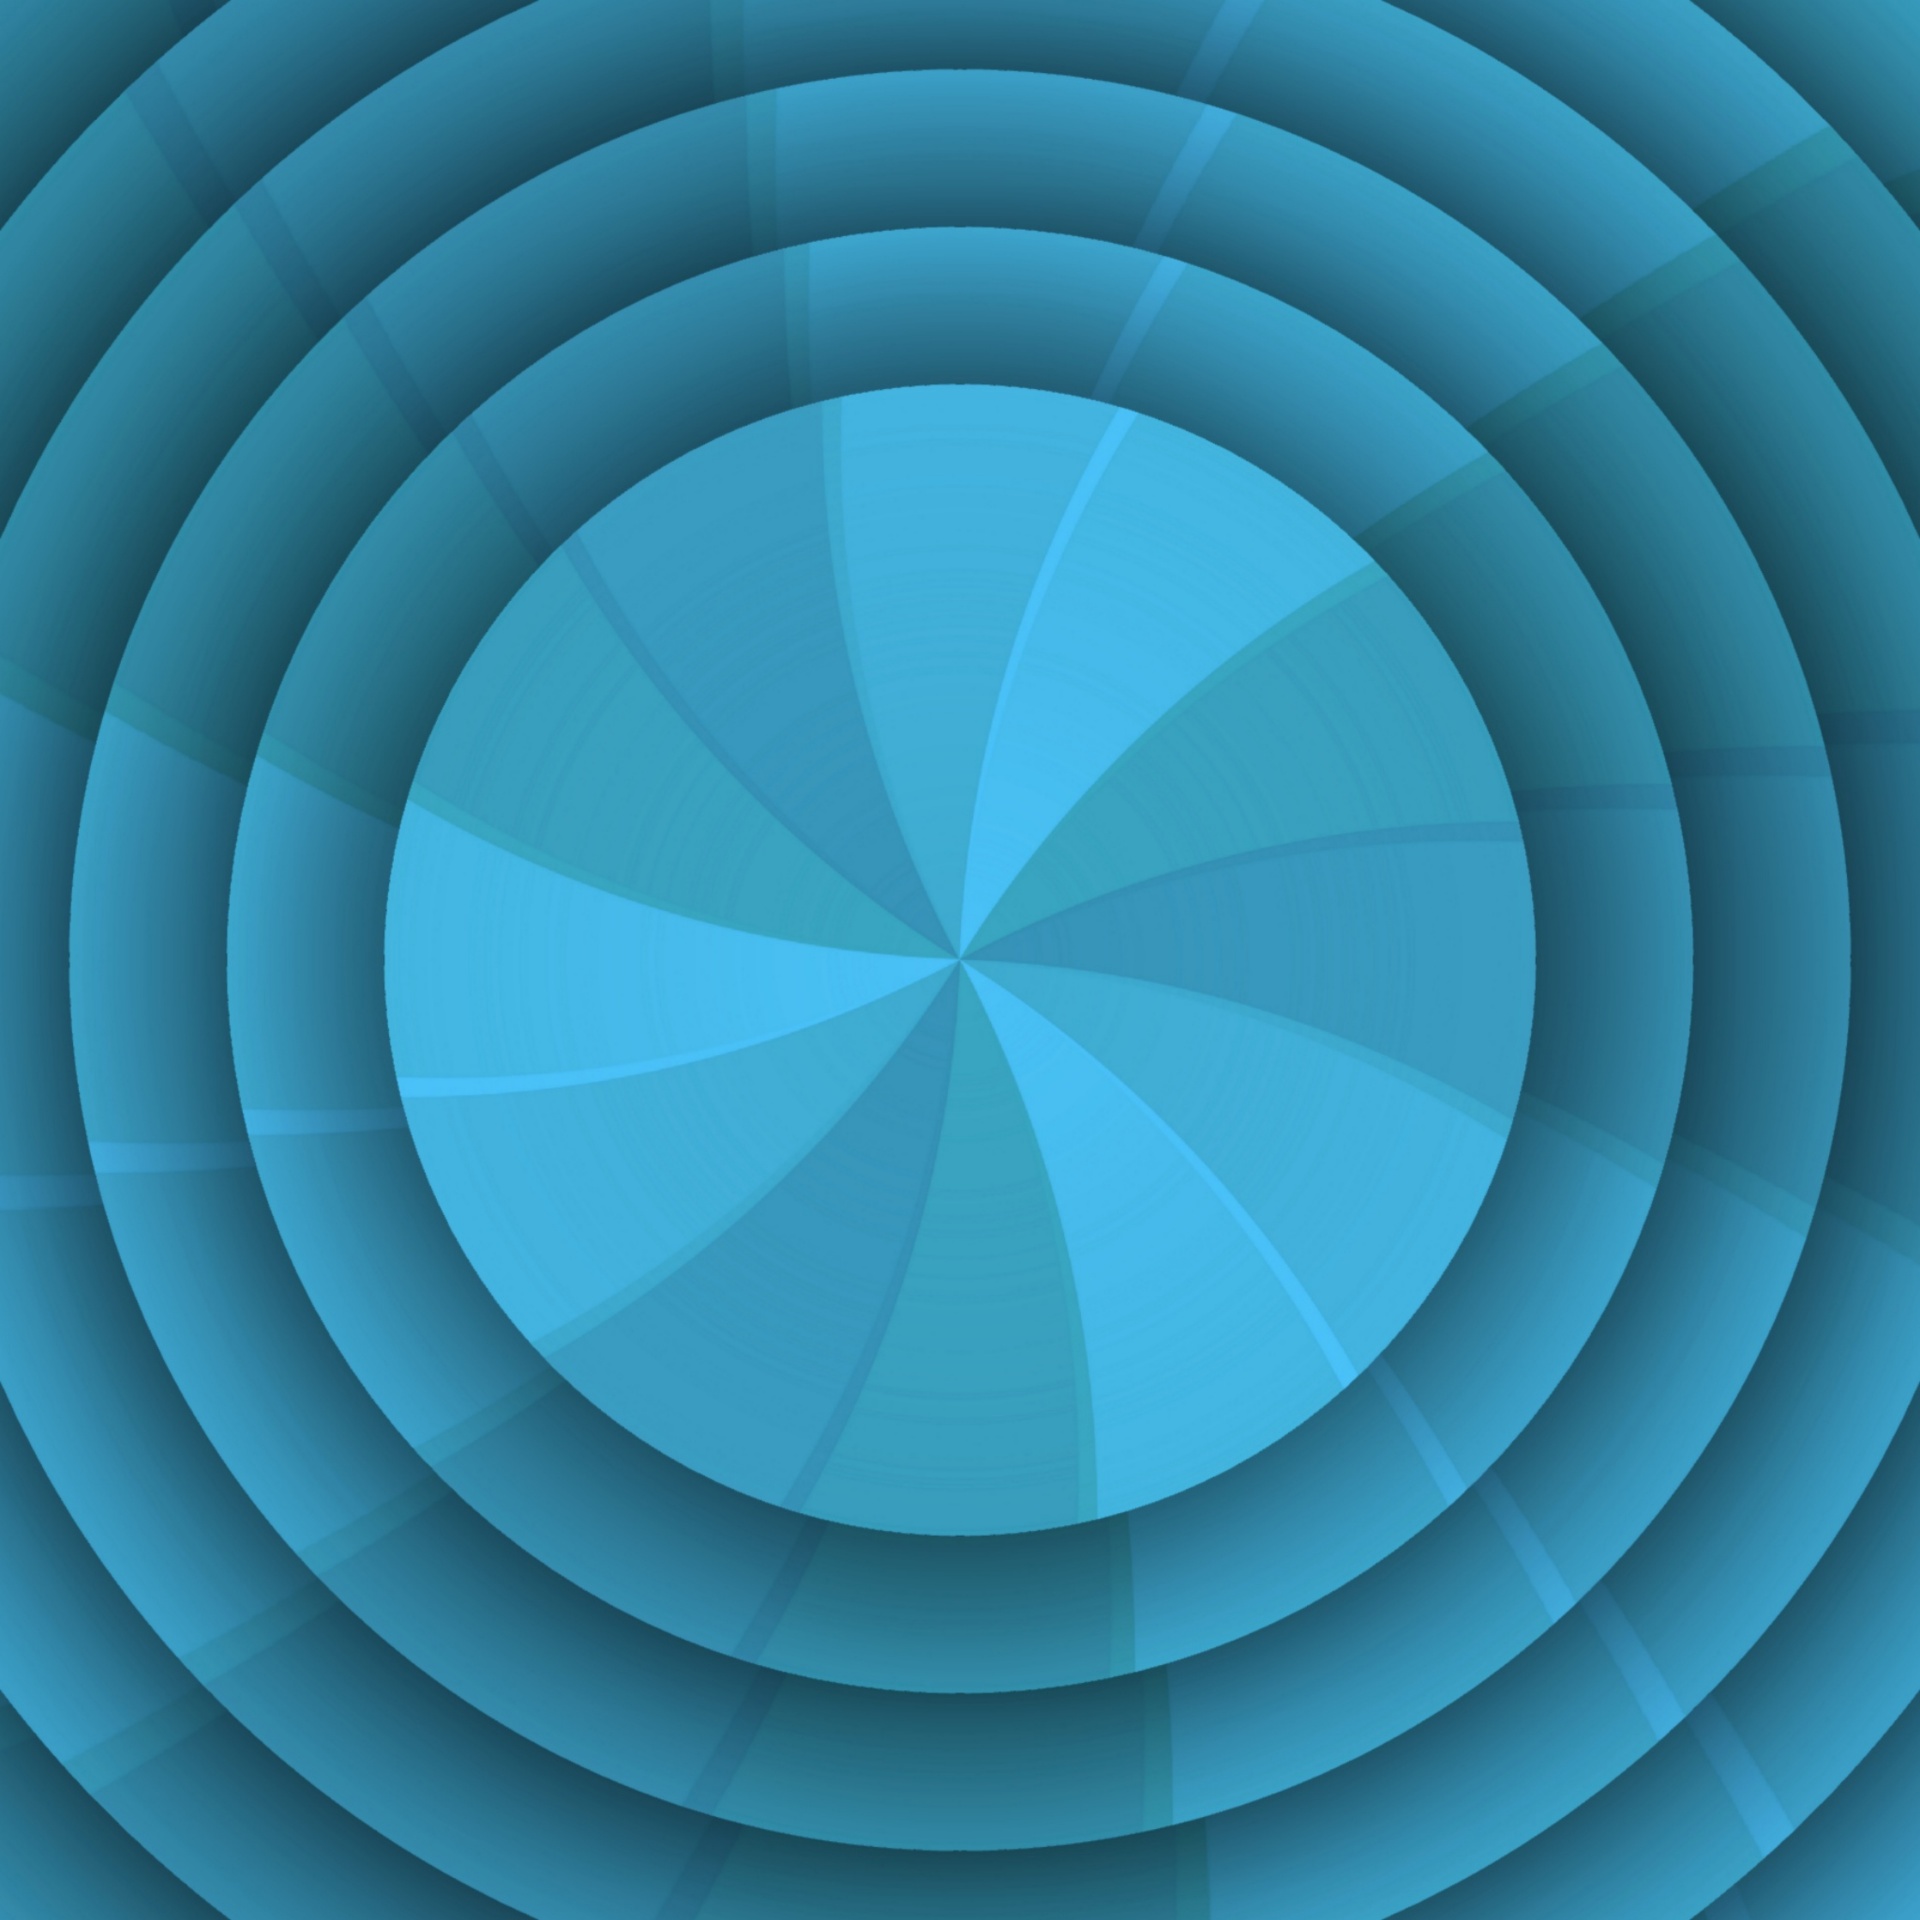 concentric blue discs